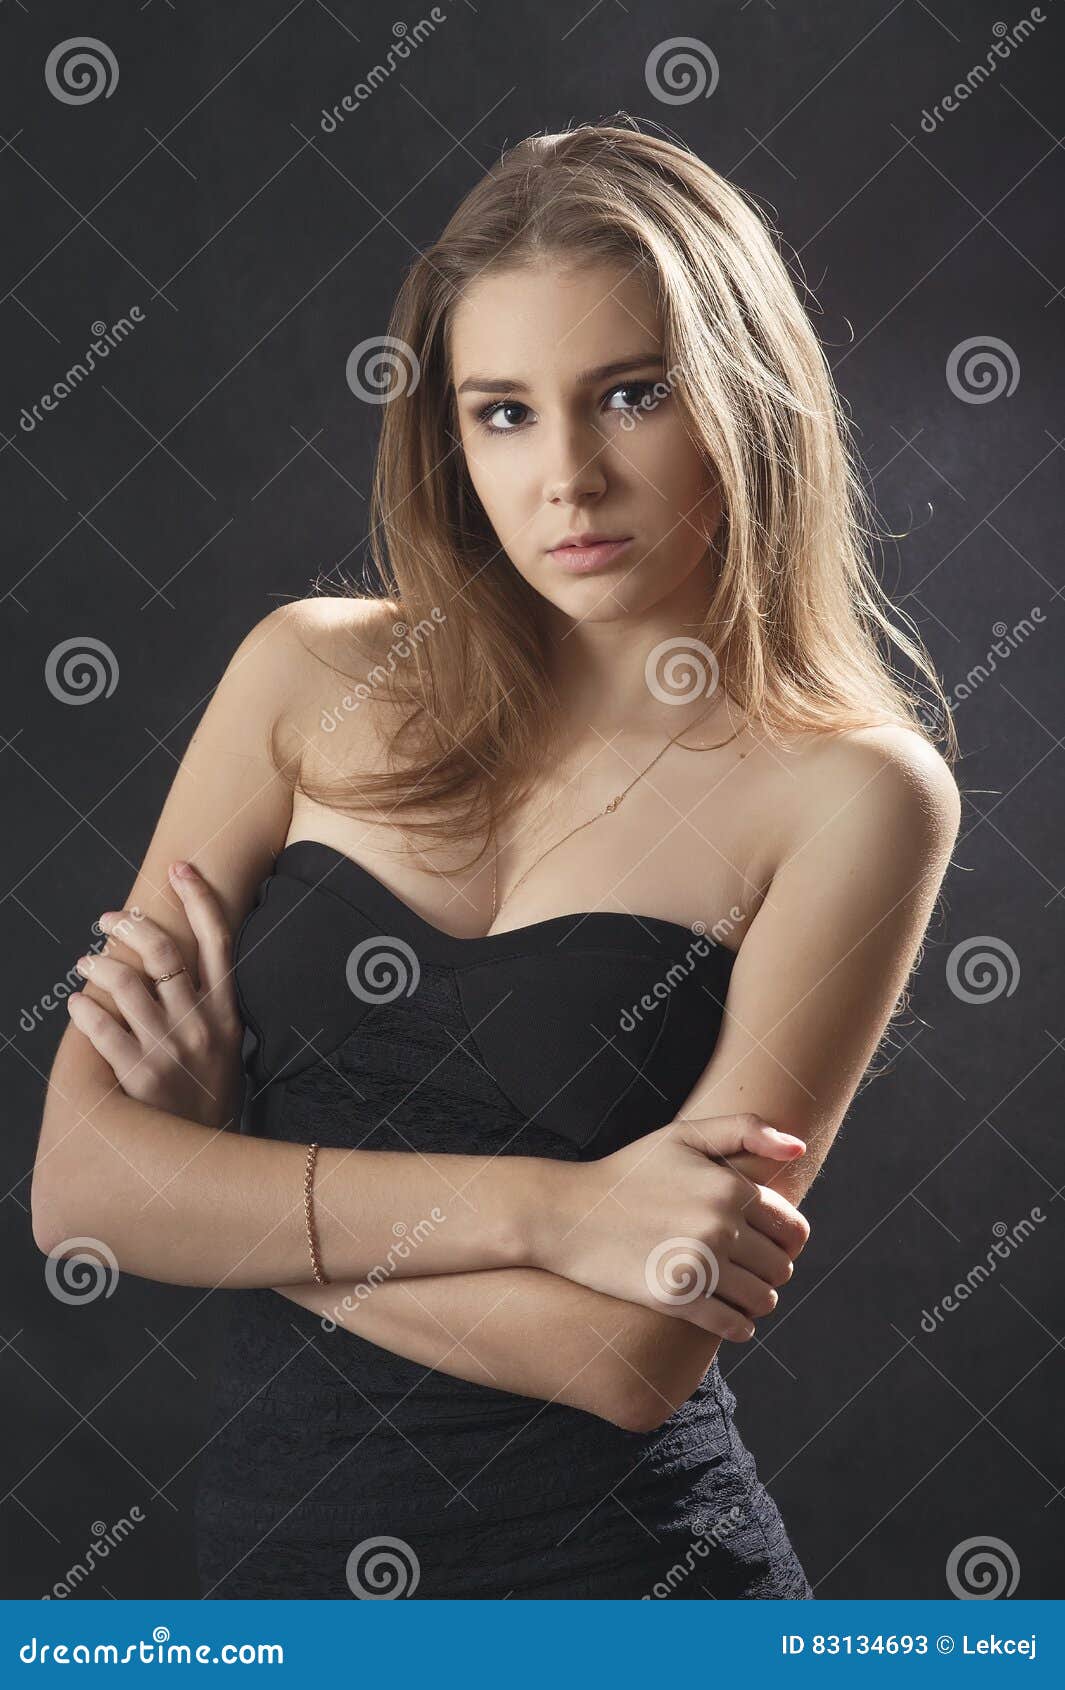 Image result for girl beautiful shoulders